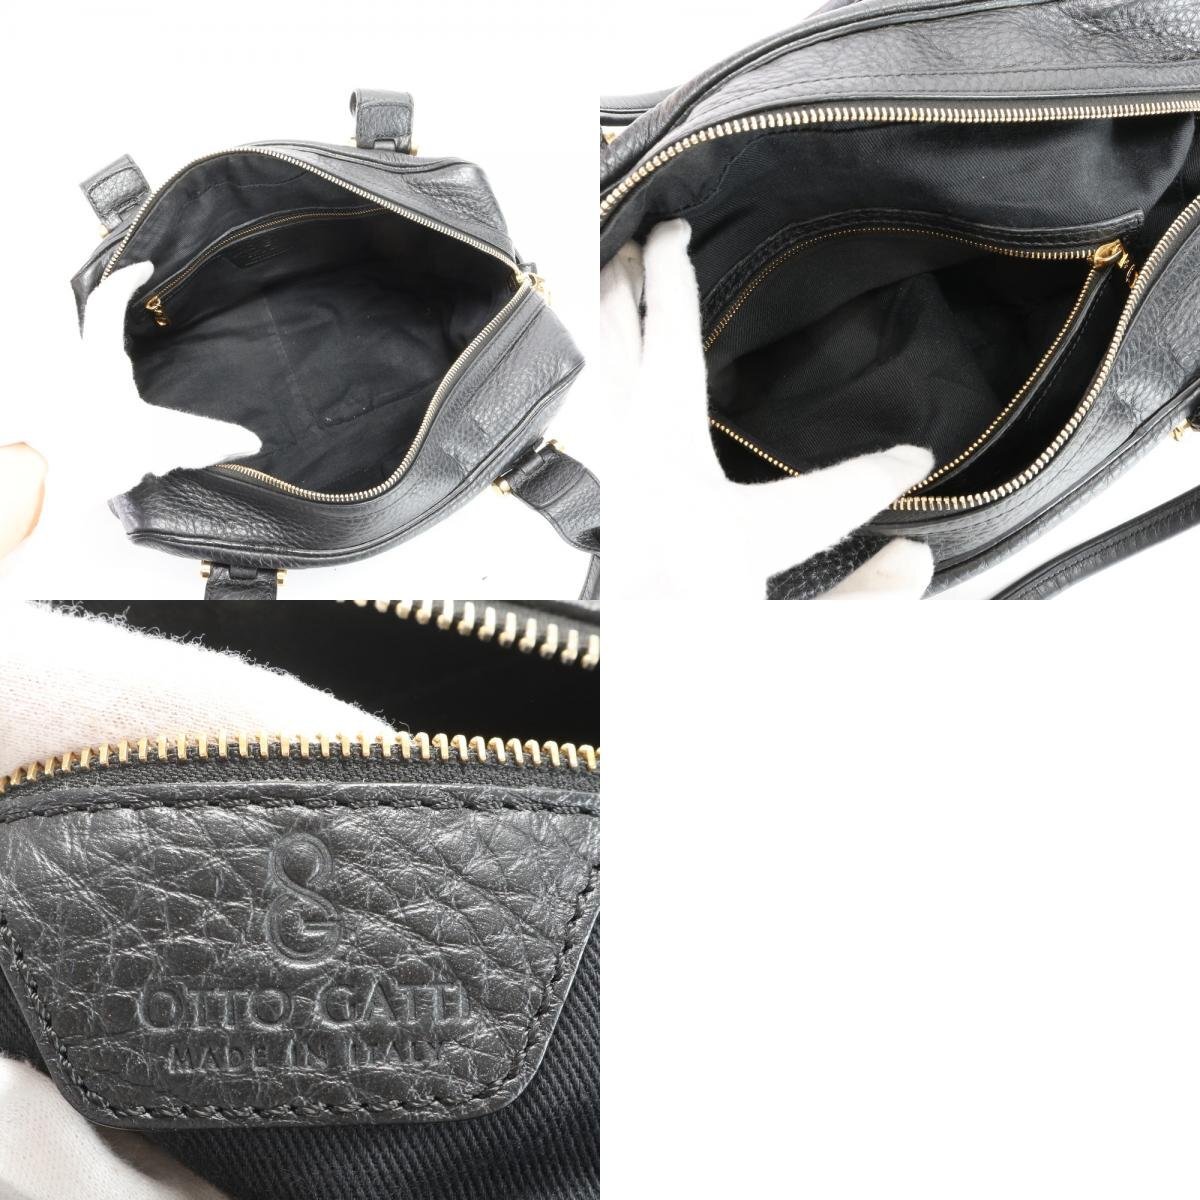 1 jpy # ultimate beautiful goods #OTTO GATTIotogati leather tote bag shoulder .. shoulder hand original leather black black lady's EHM X12-6